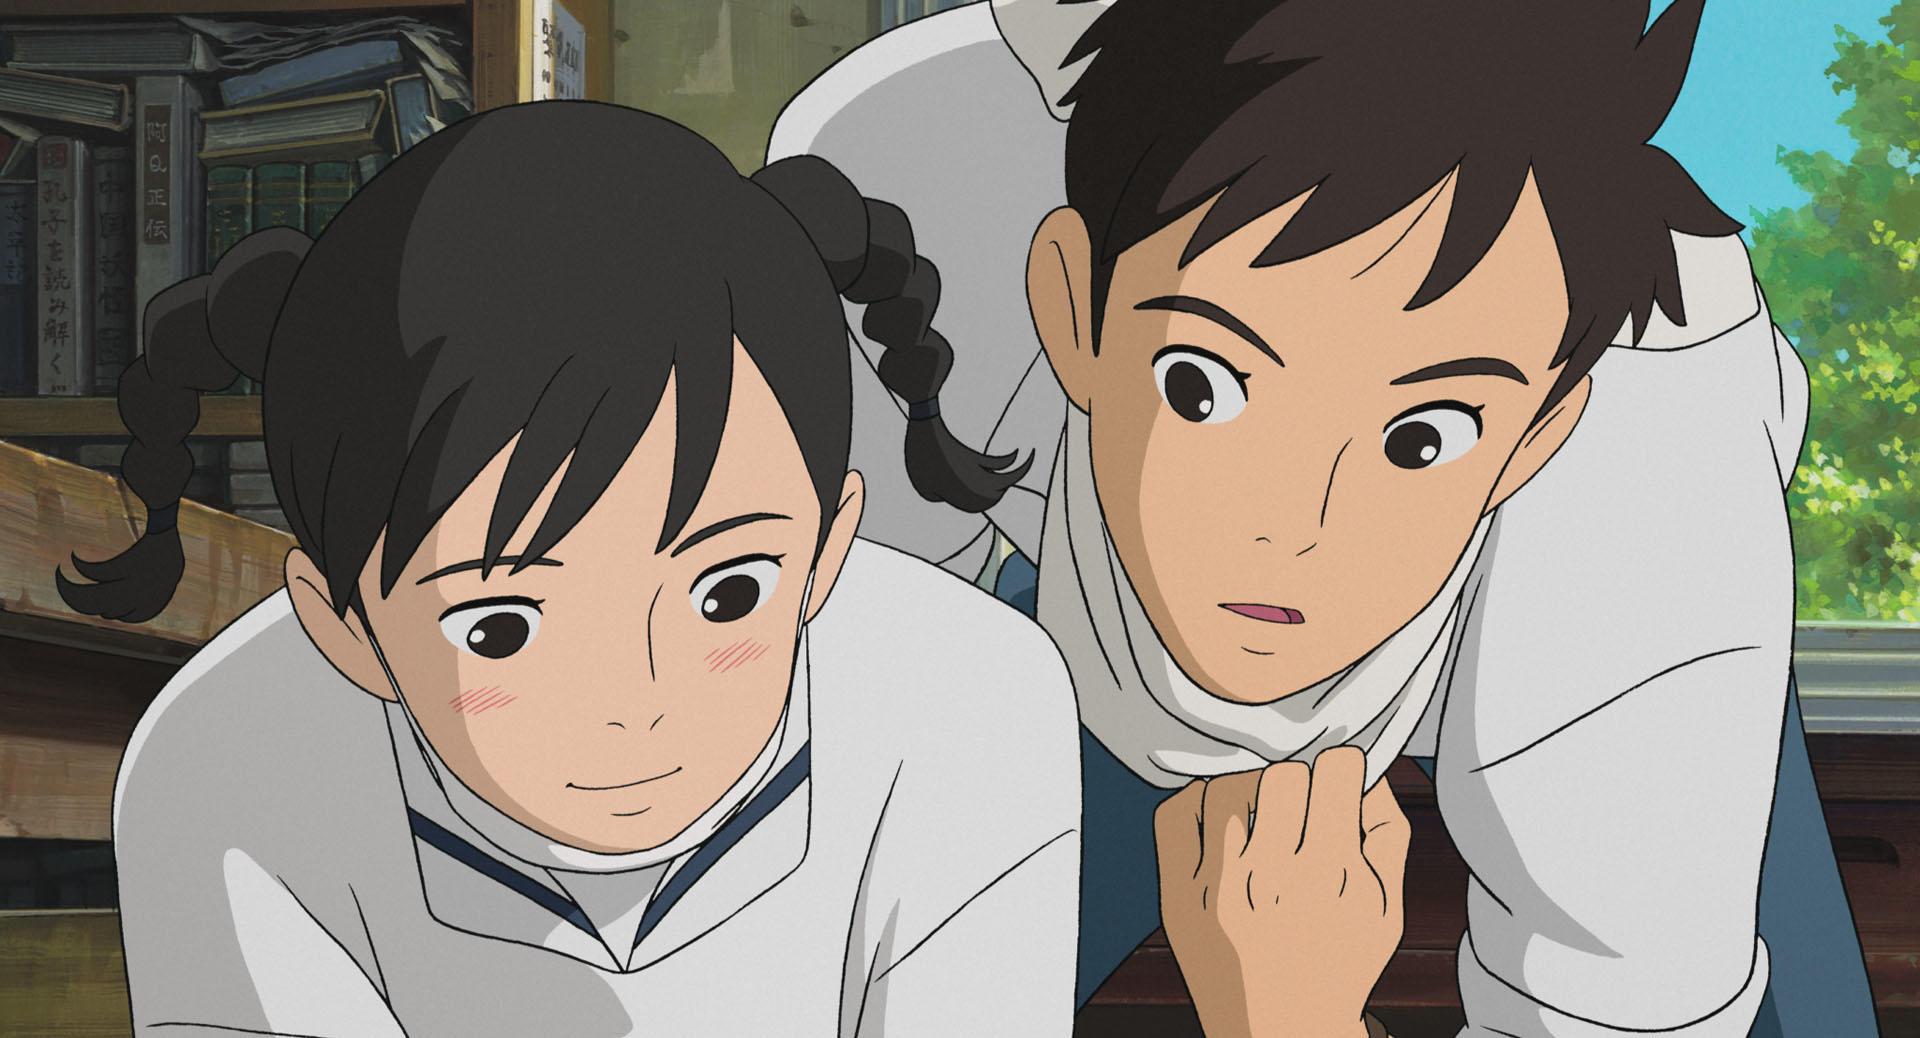 10 romantic scenes in Studio Ghibli films